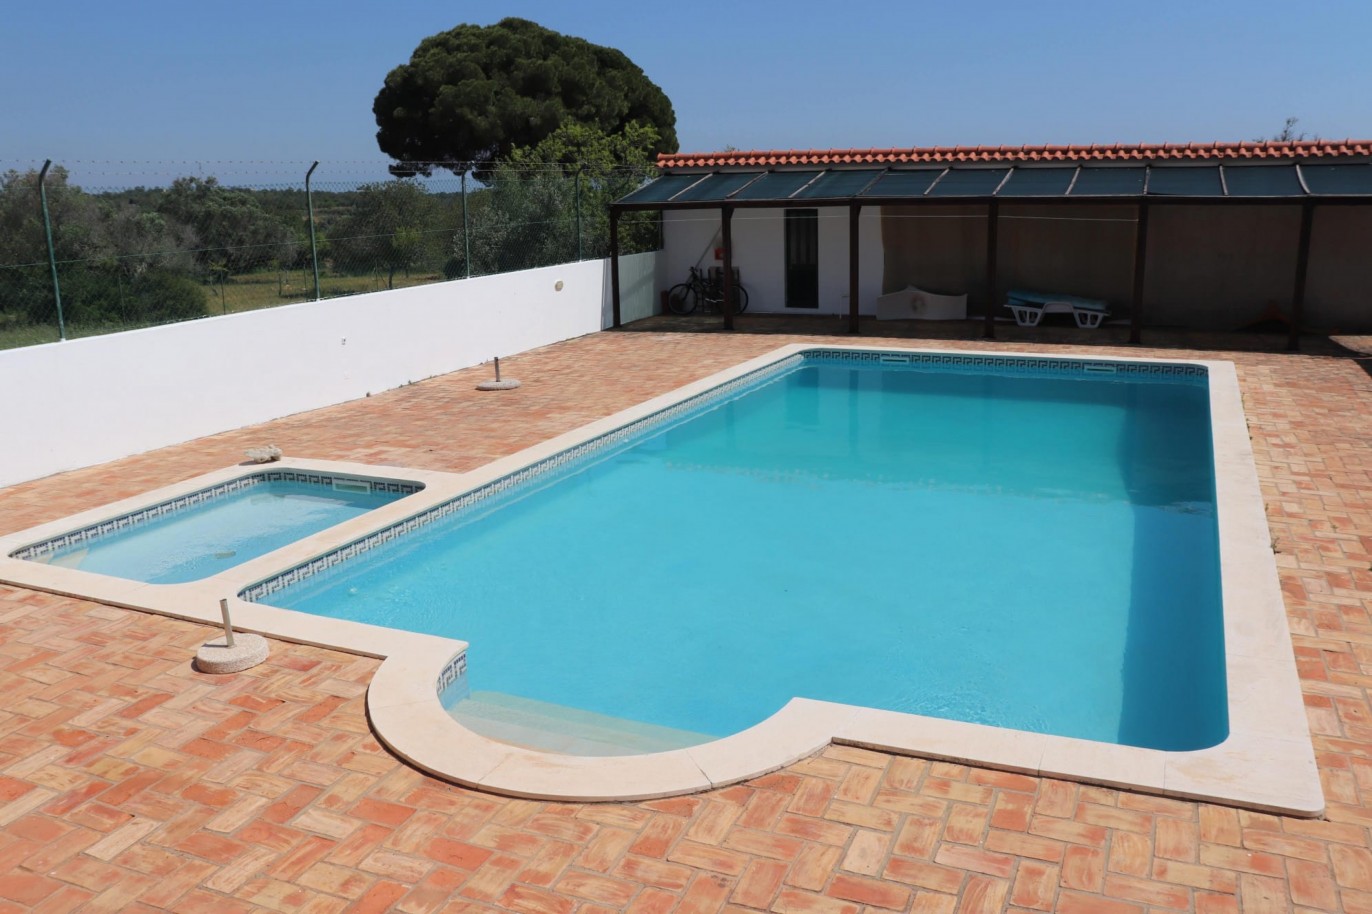 4 Bedroom Villa with swimming pool, for sale in Tunes, Algarve_202347